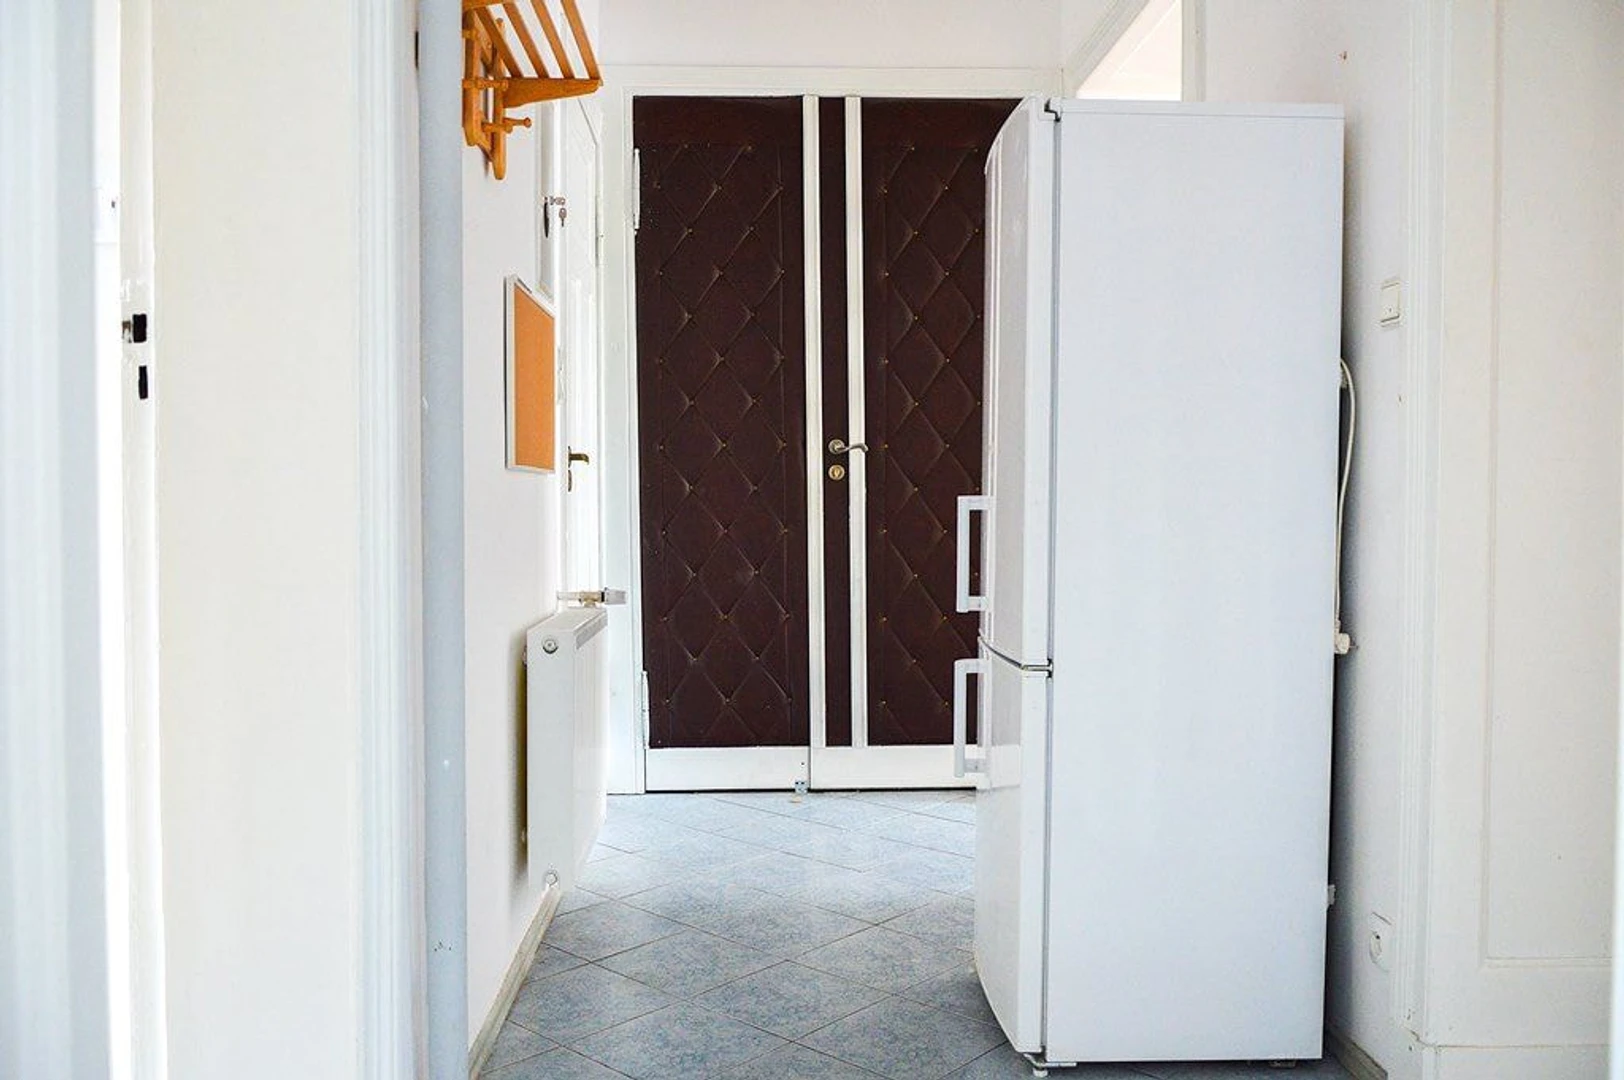 Shared room in 3-bedroom flat Poznań